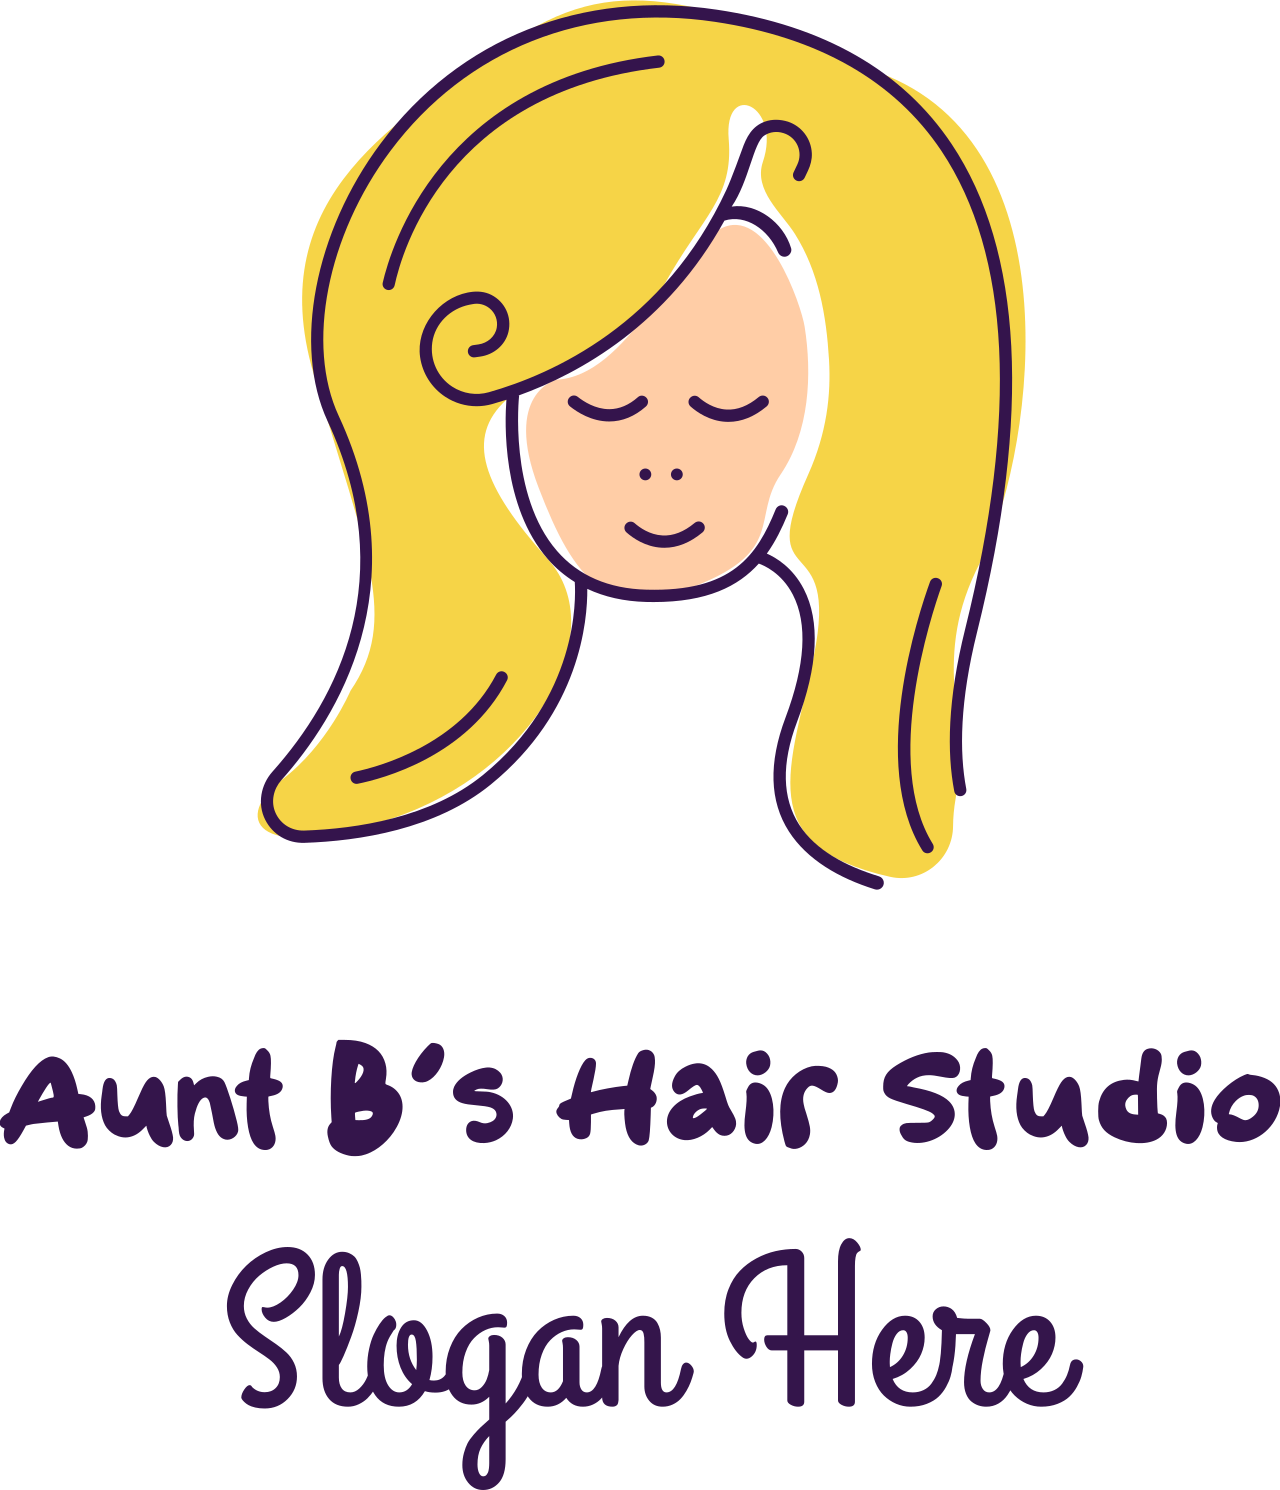 Aunt B’s Hair Studio's web page